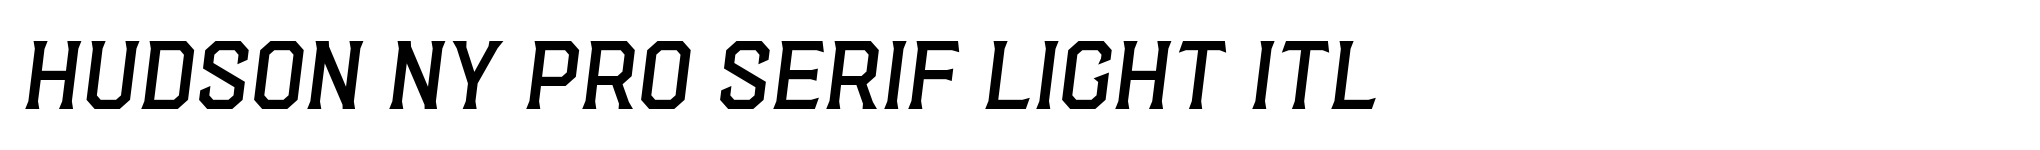 Hudson NY Pro Serif Light Itl image